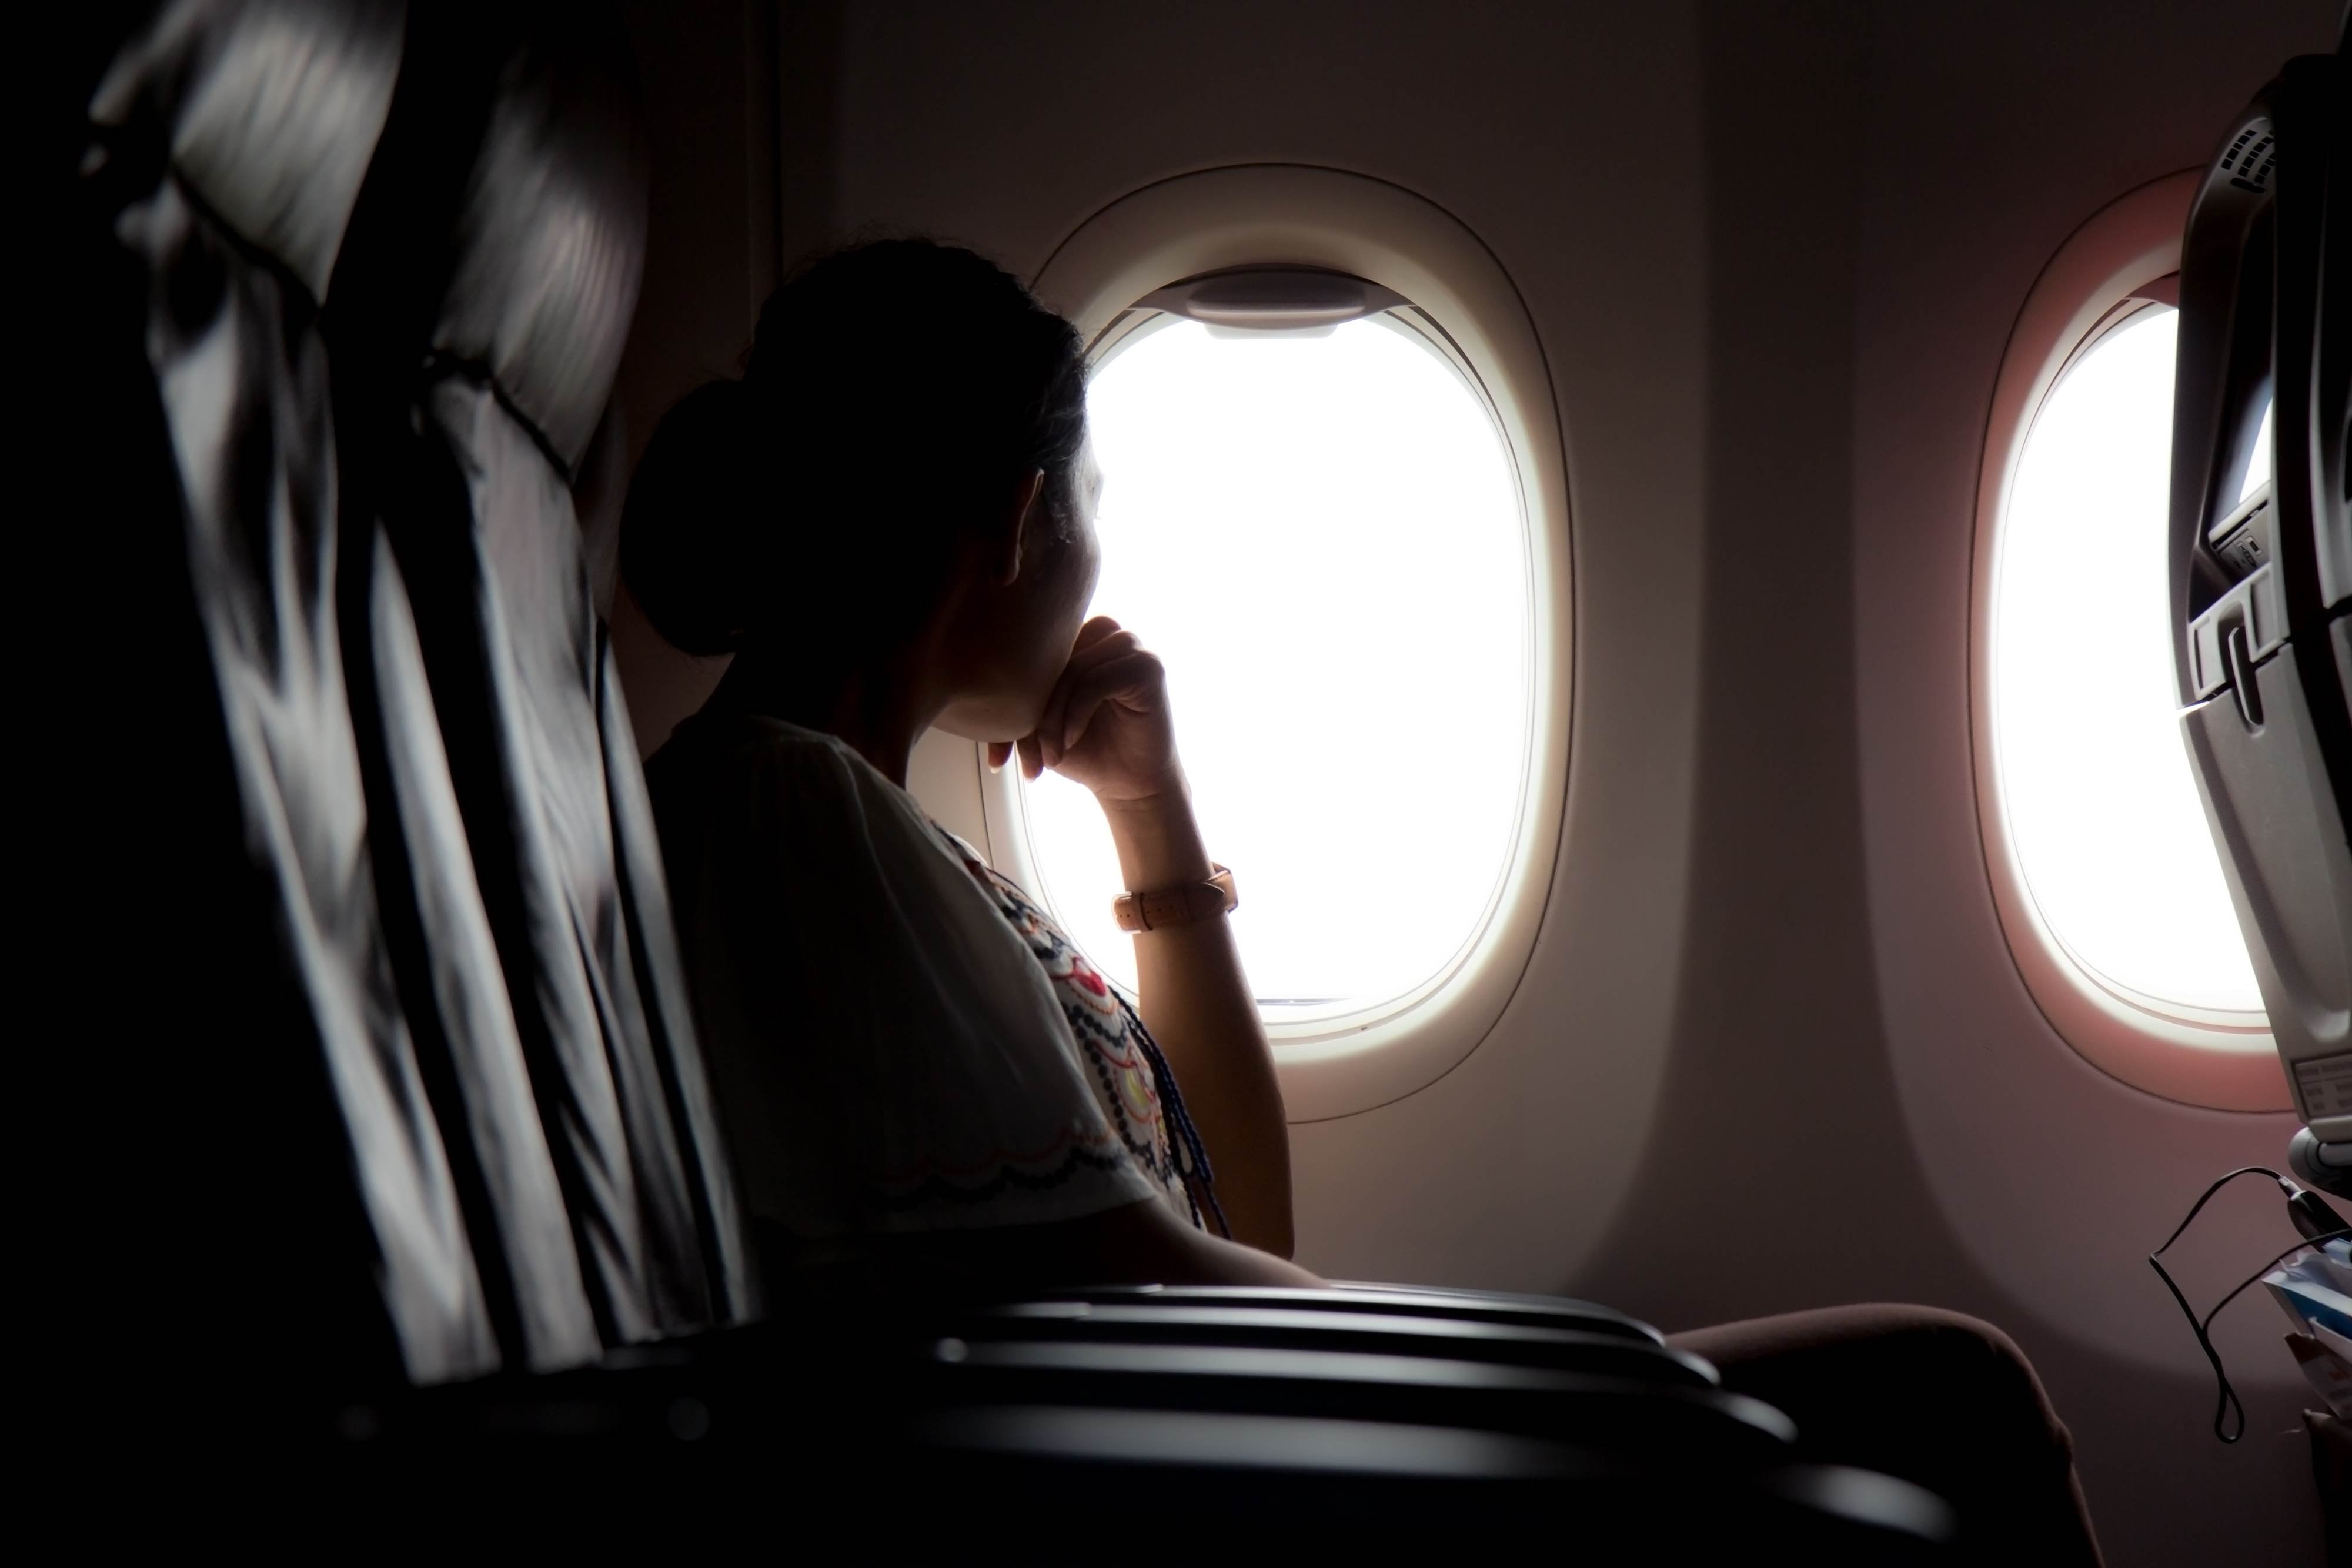 Страх полета на самолете. Девушка в самолете. Девушка в самолете у окна. Человек в иллюминаторе. Фотосессия с самолетом.